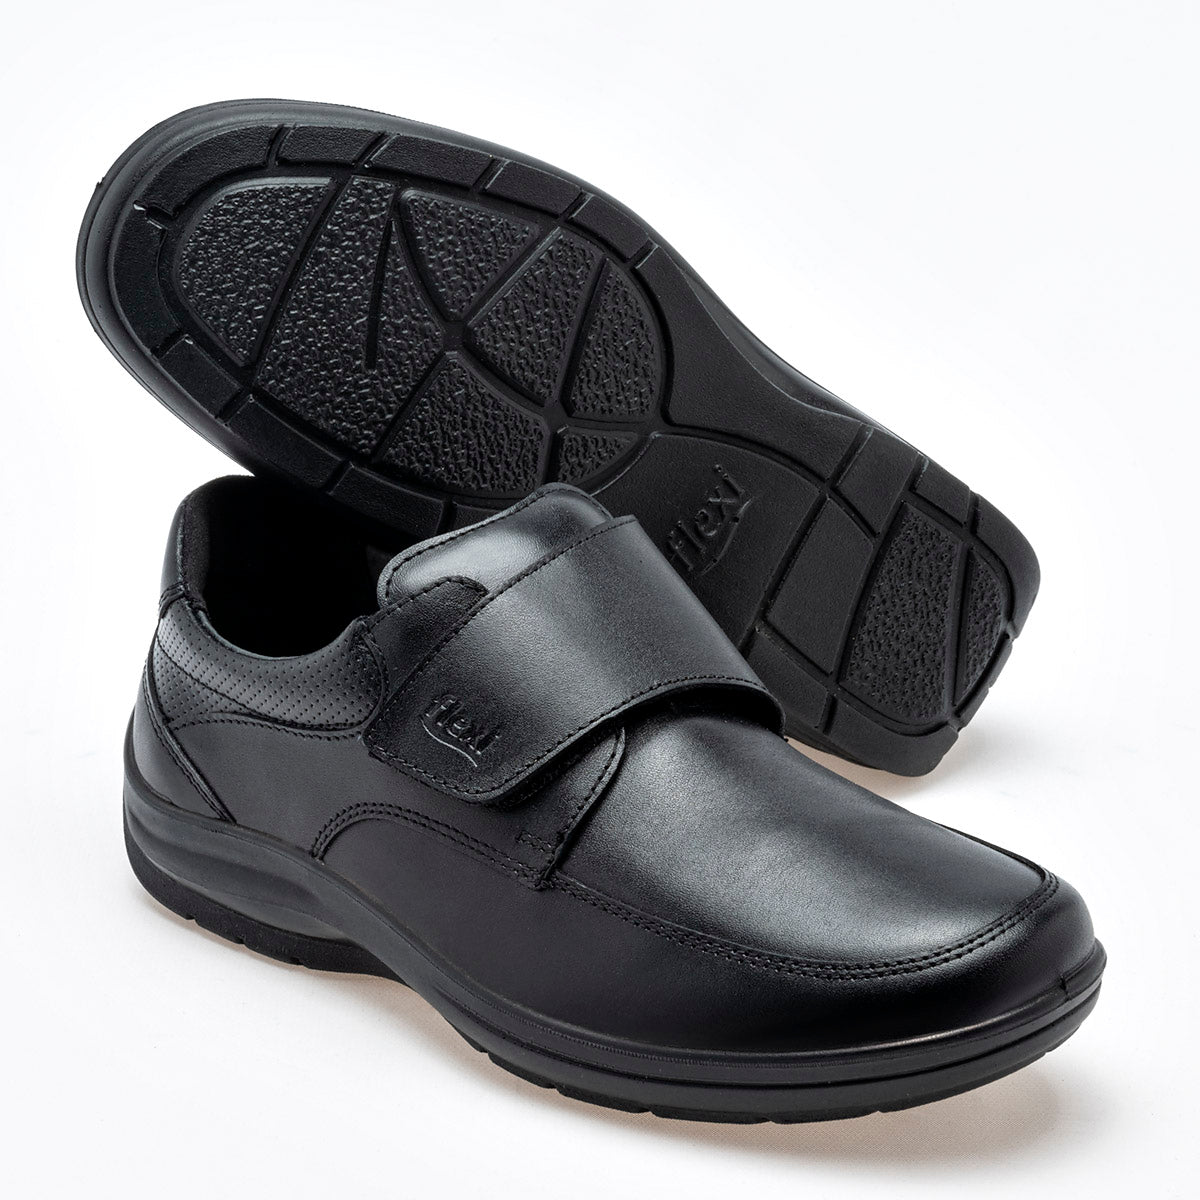 Pakar.com - Mayo: Regalos para mamá | Zapato casual para joven cod-120590